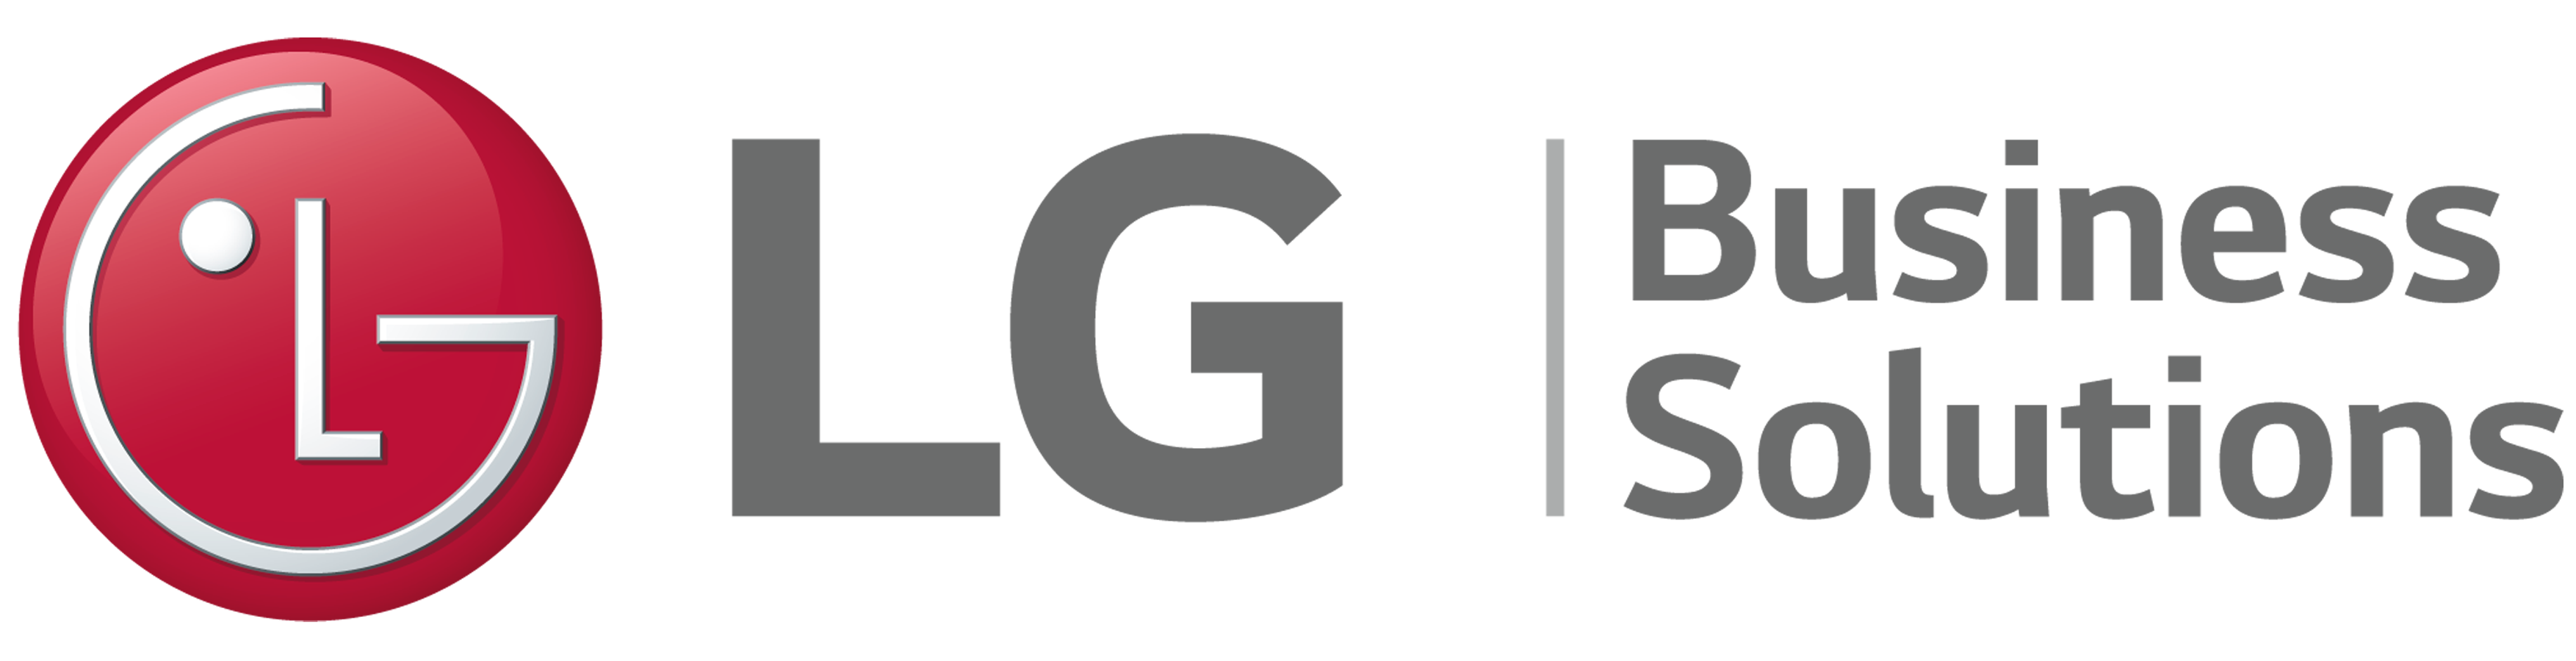 LG Transparent Clip Art Background